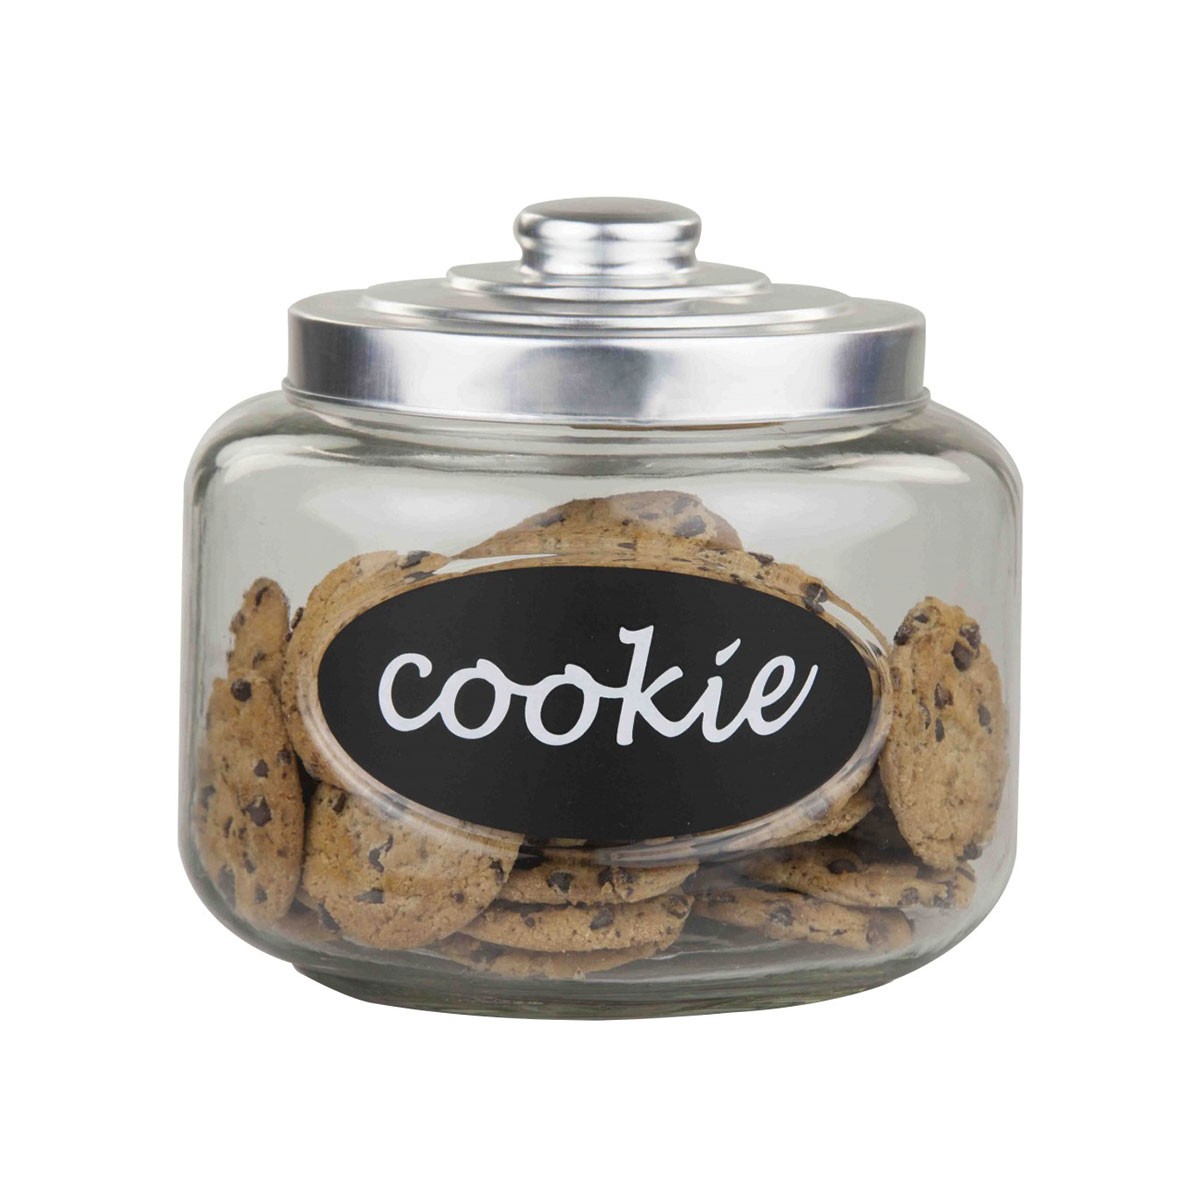 Nonni's cookie jar